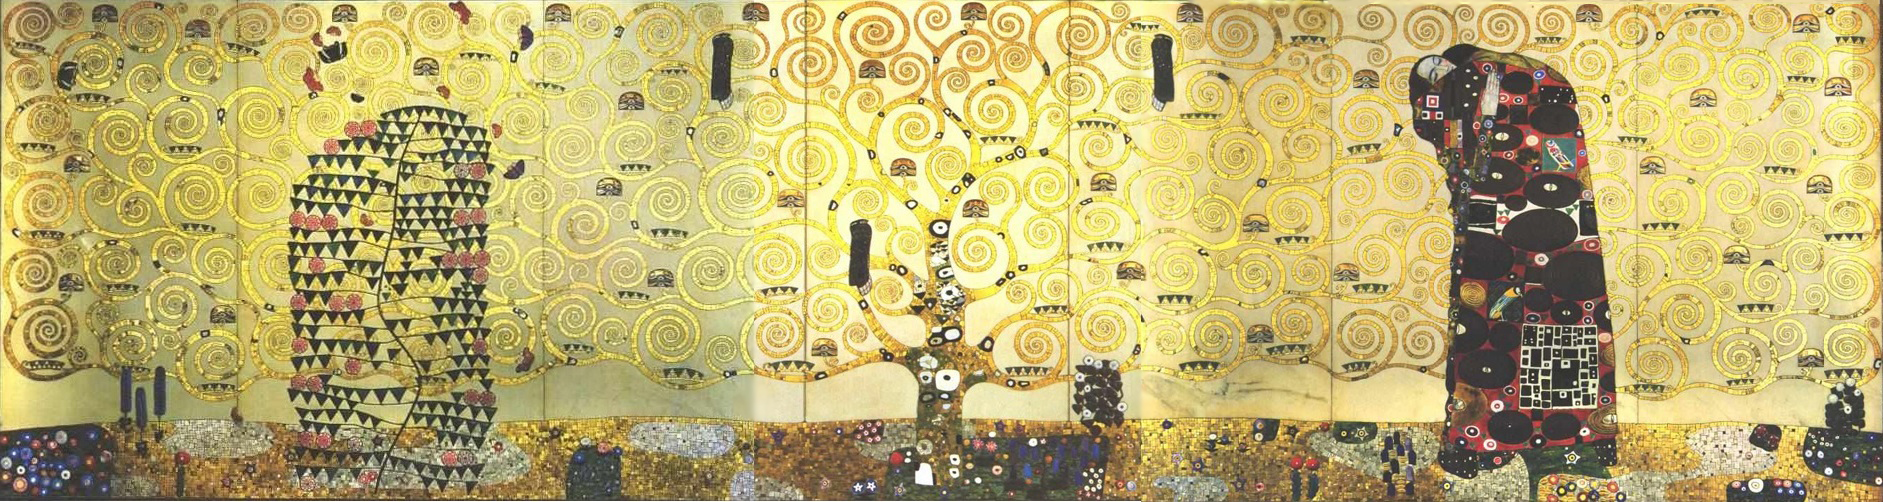 Portion of Stocklet Frieze by Gustav Klimt.